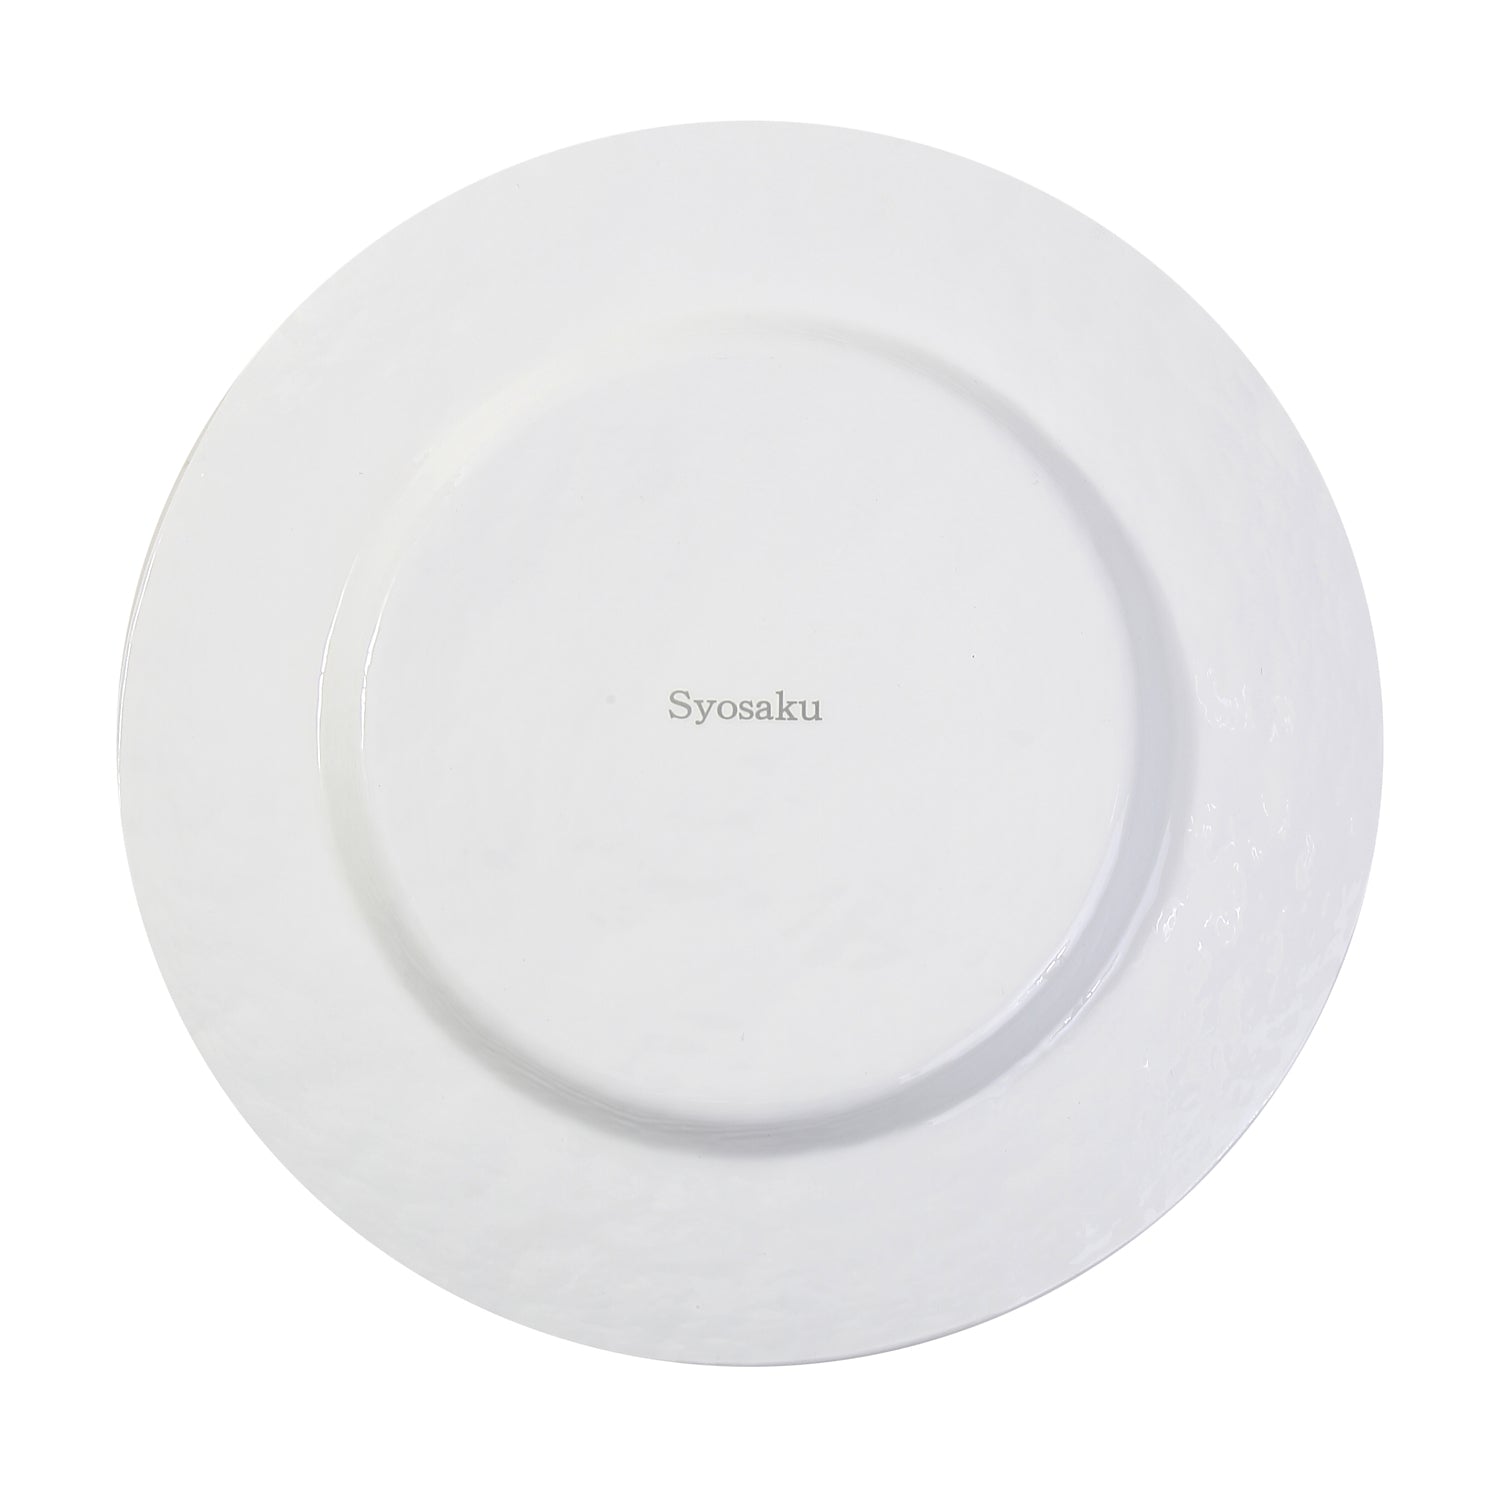 Syosaku Japanese Urushi Glass Dinner Plate 12.5-inch (32cm) Pure White with Gold Leaf, Dishwasher Safe - Syosaku-Japan